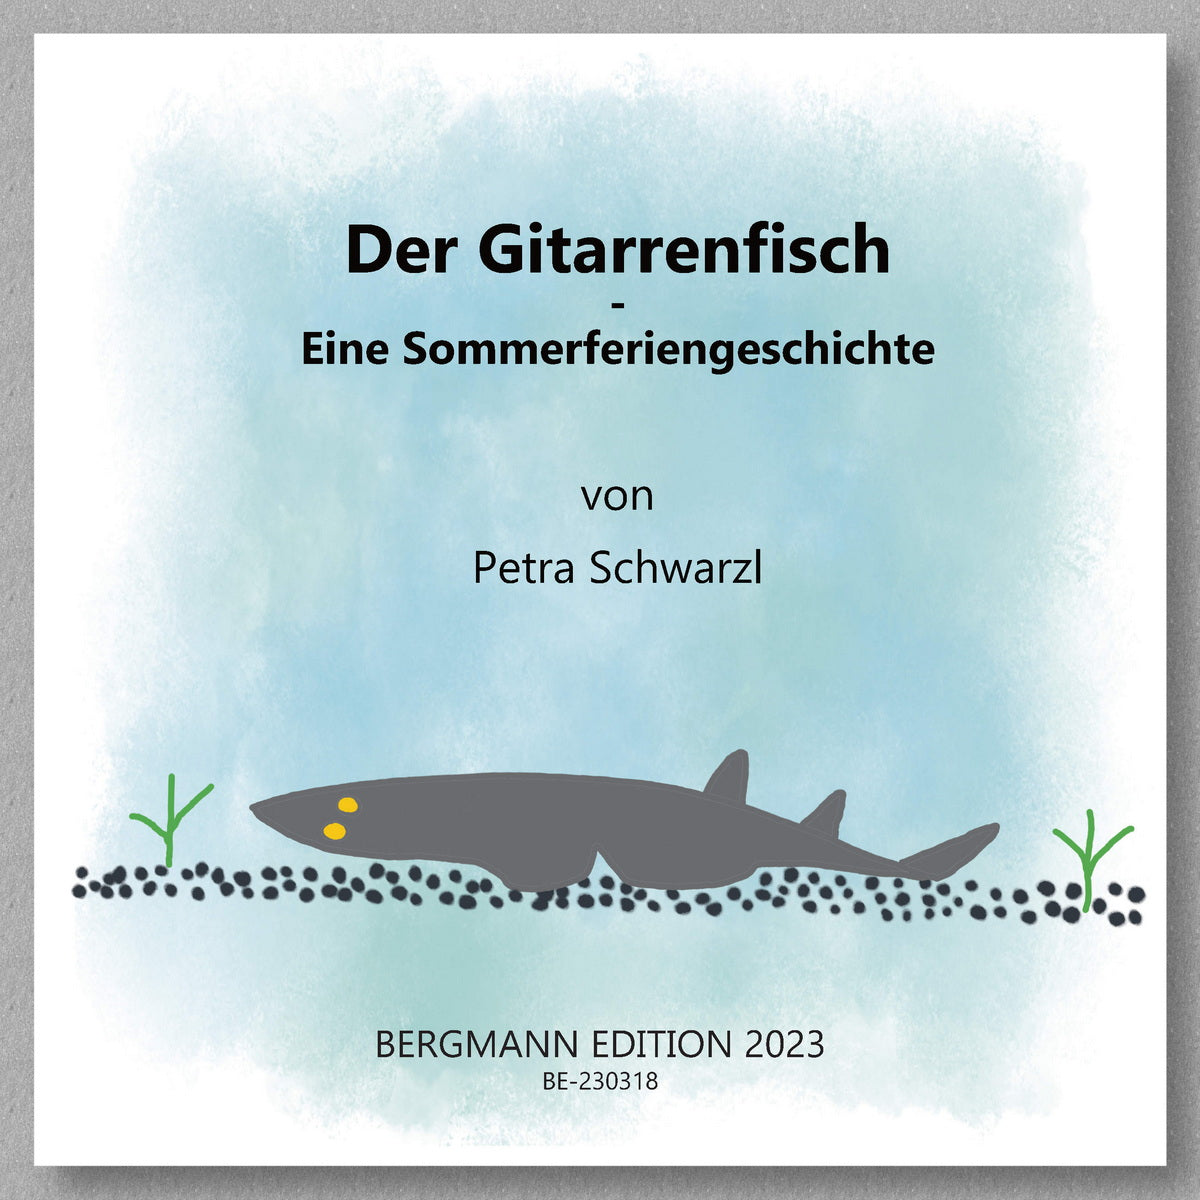 Der Gitarrenfisch by Petra Schwarzl - preview of the cover